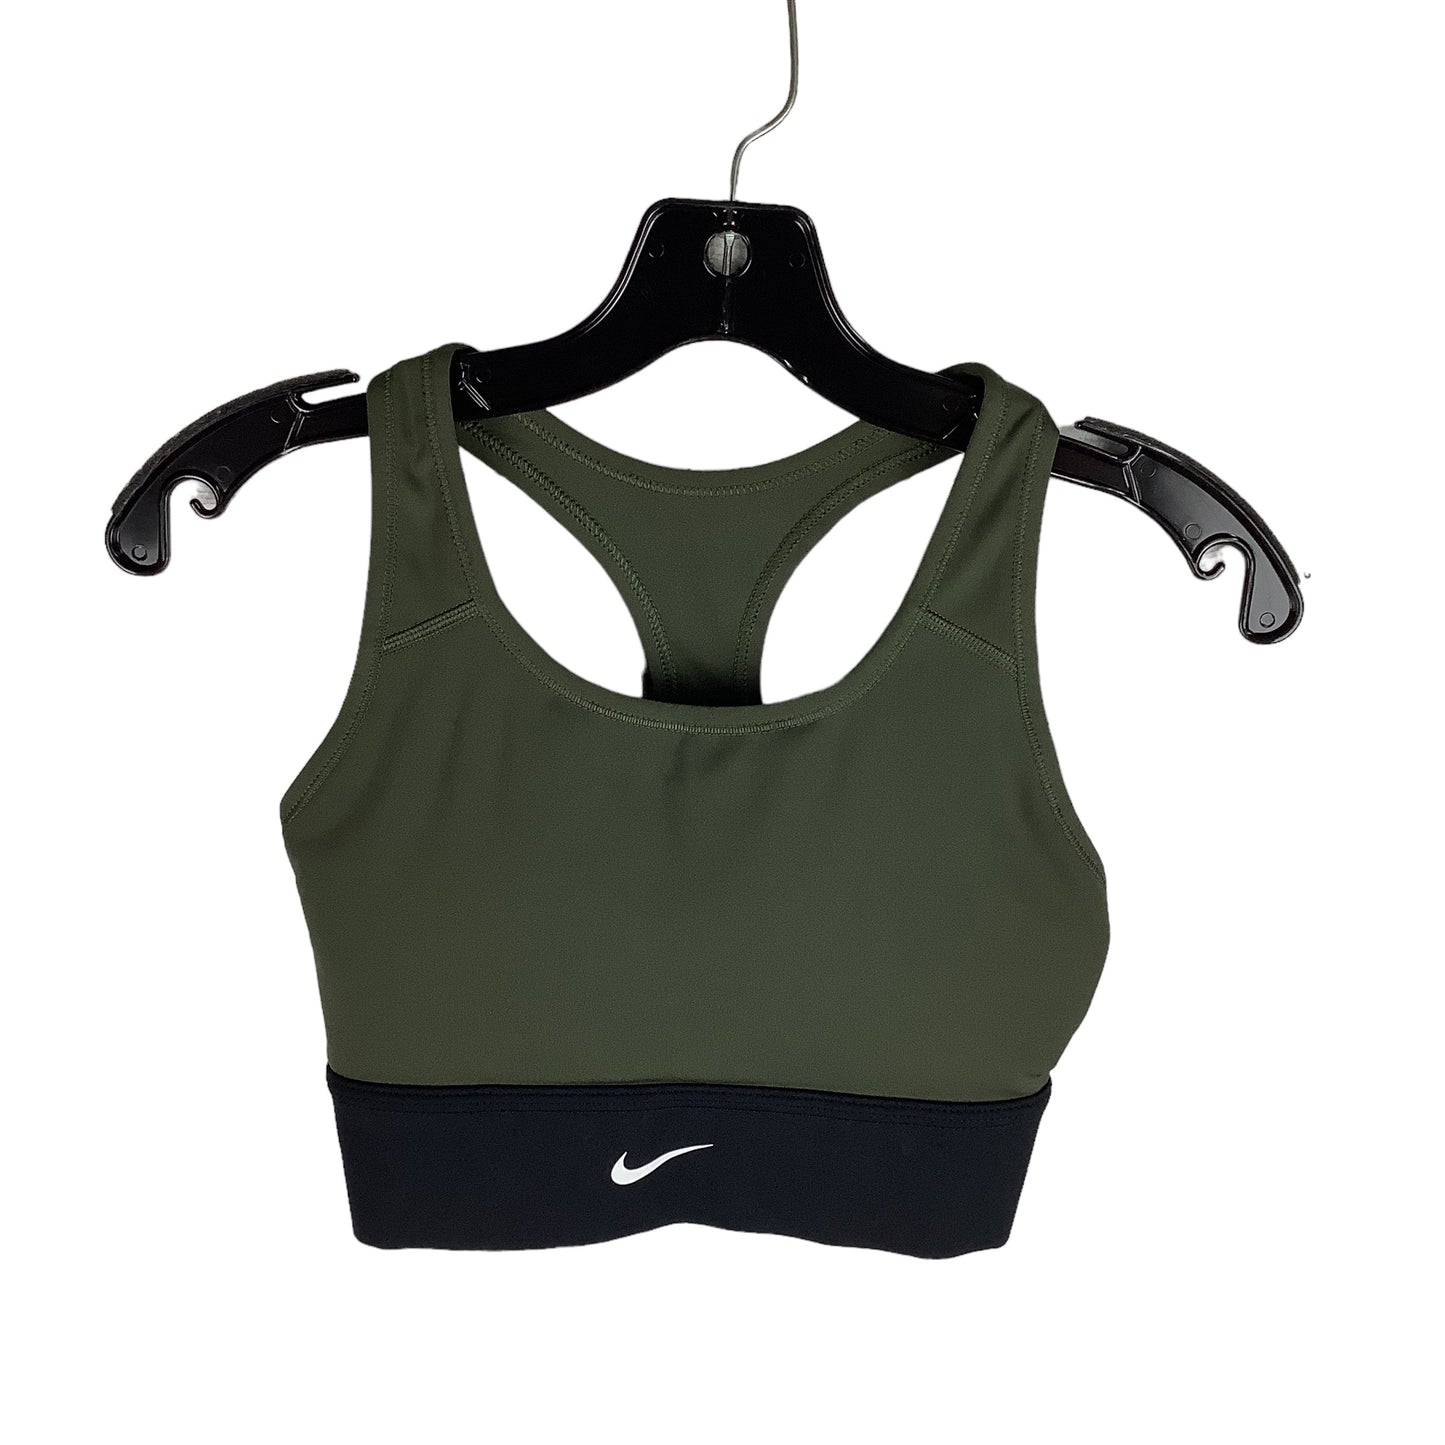 Green Athletic Bra Nike Apparel, Size S